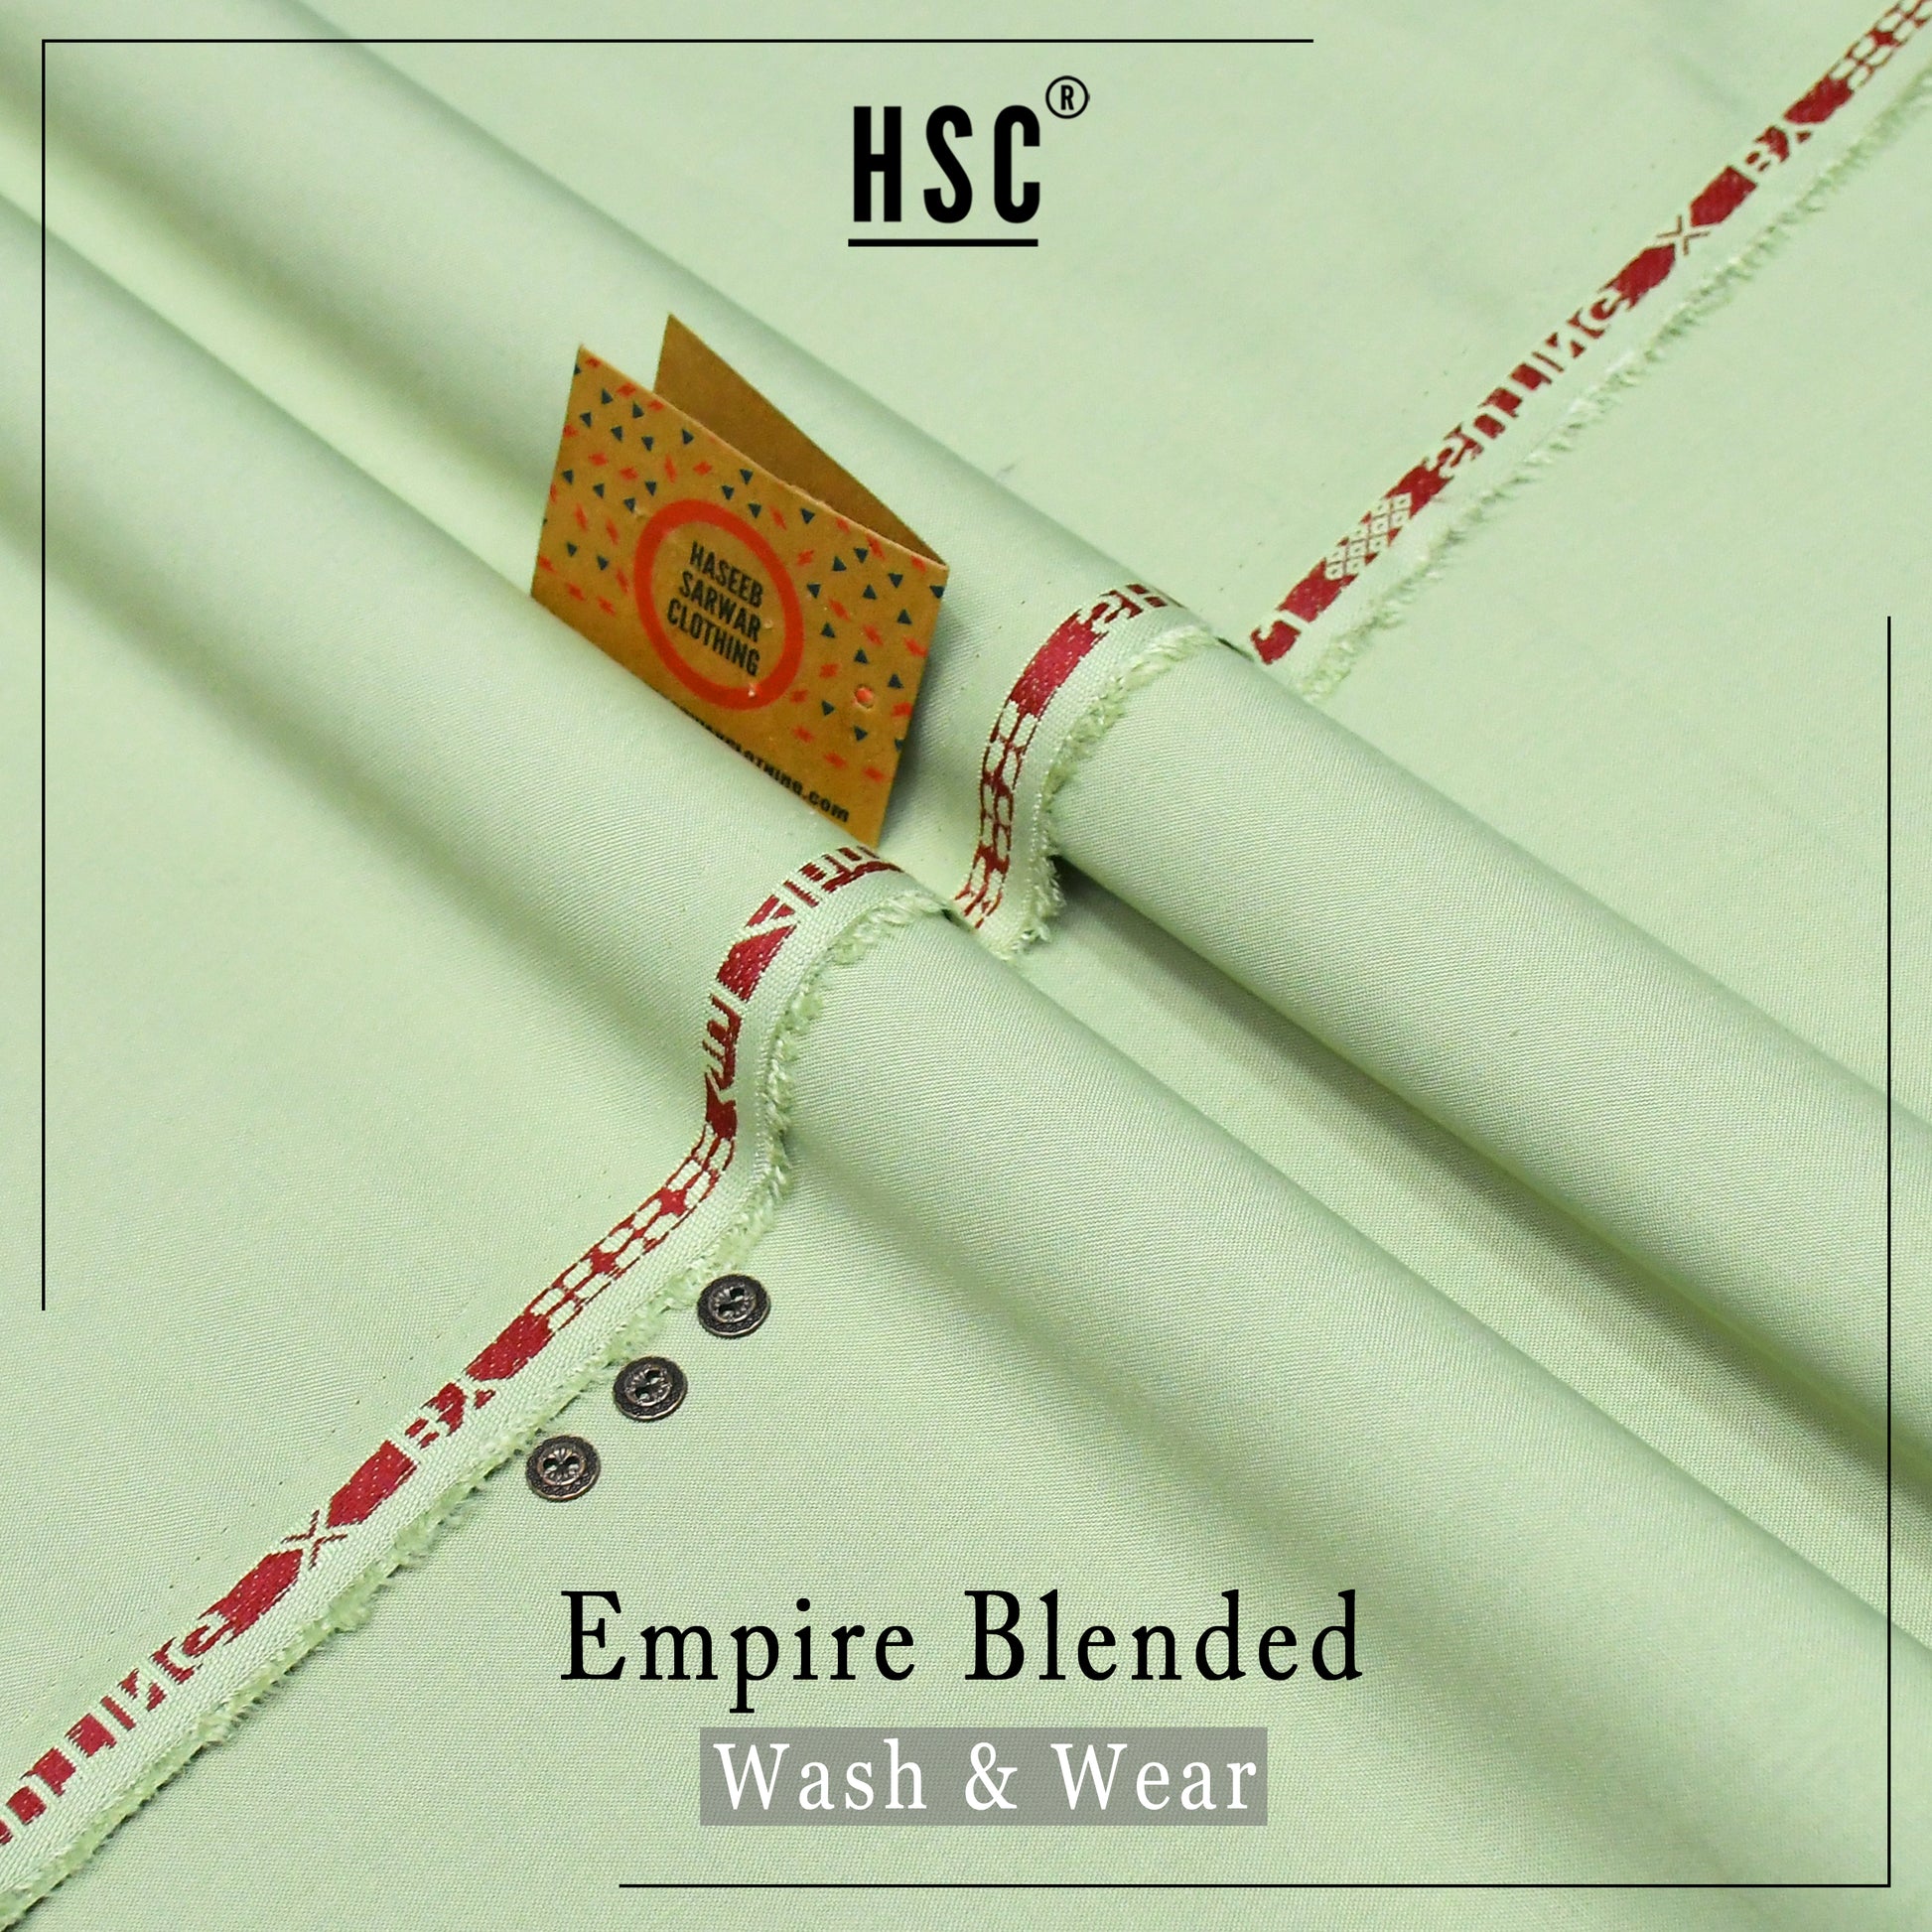 Buy 1 Get 1 Free Empire Blended Wash&Wear - EBW10 HSC